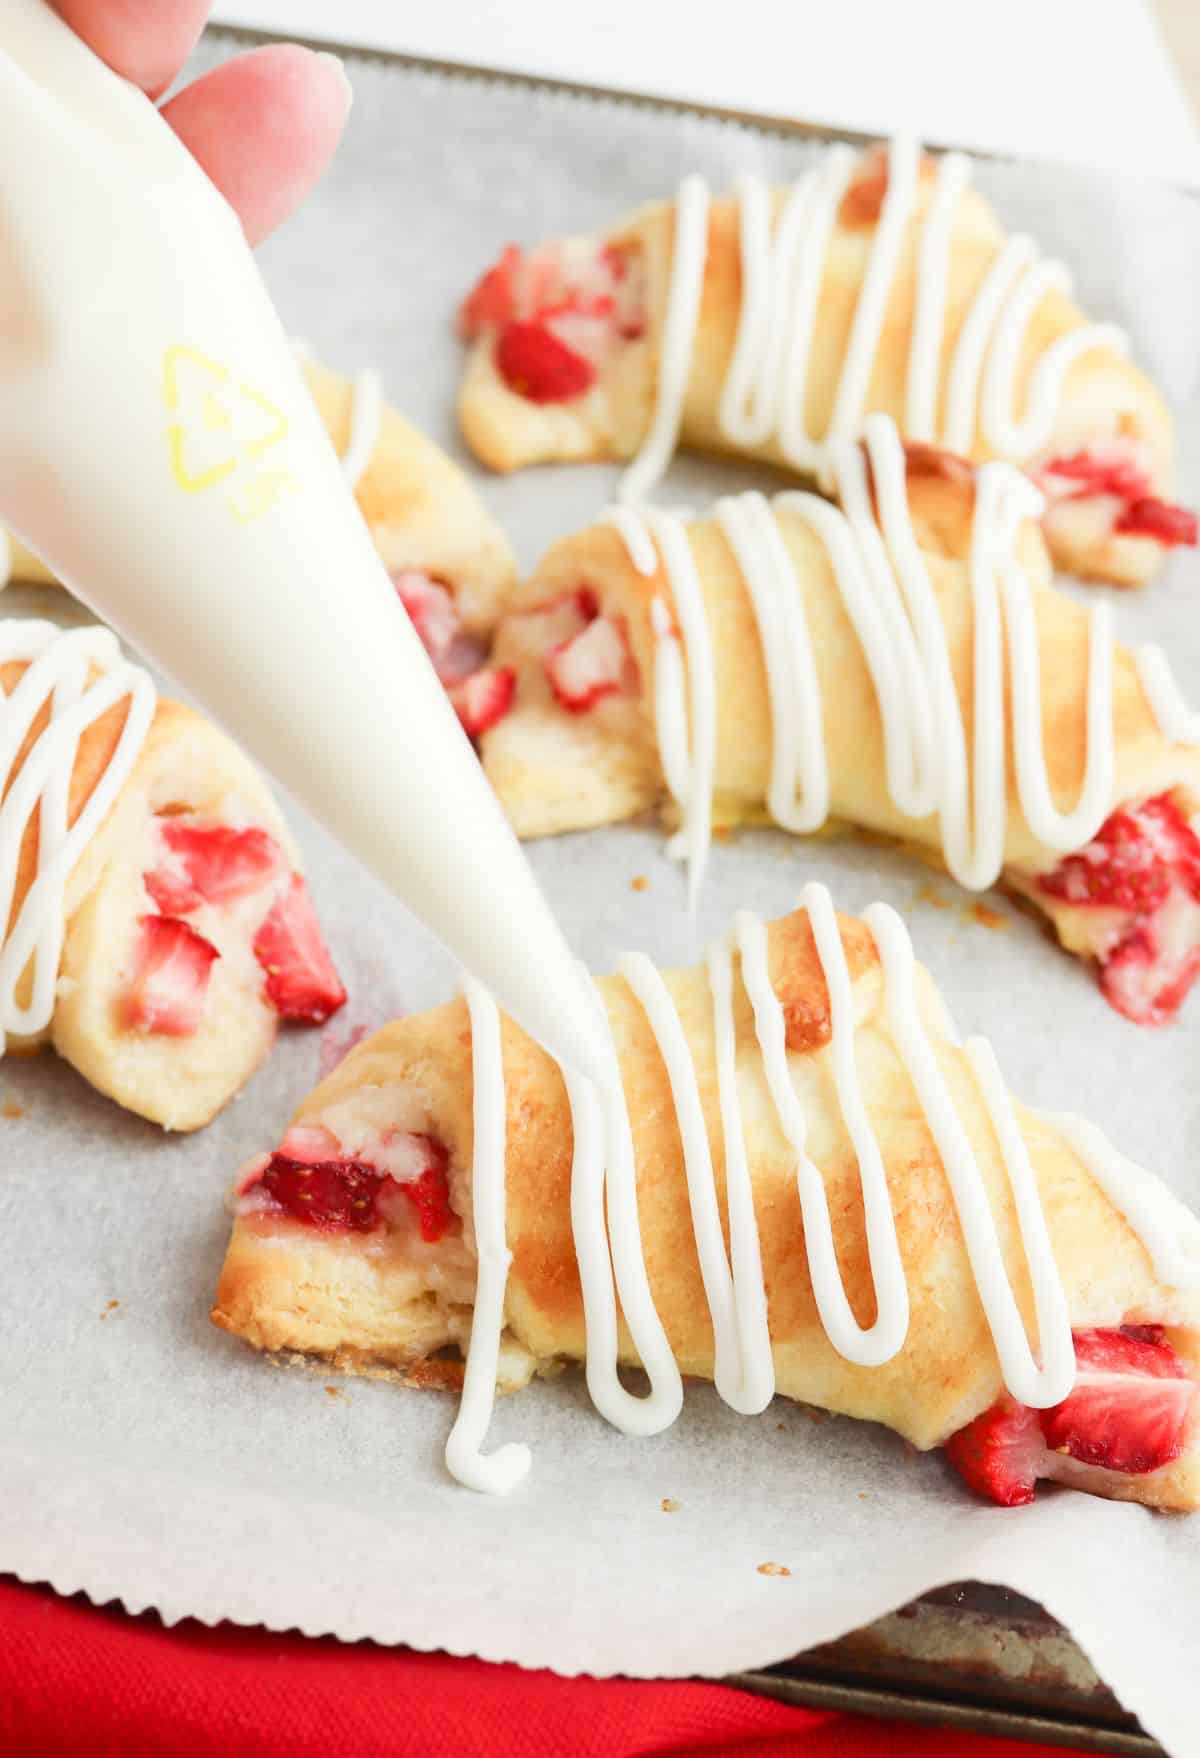 Strawberry Cheesecake Crescent Rolls